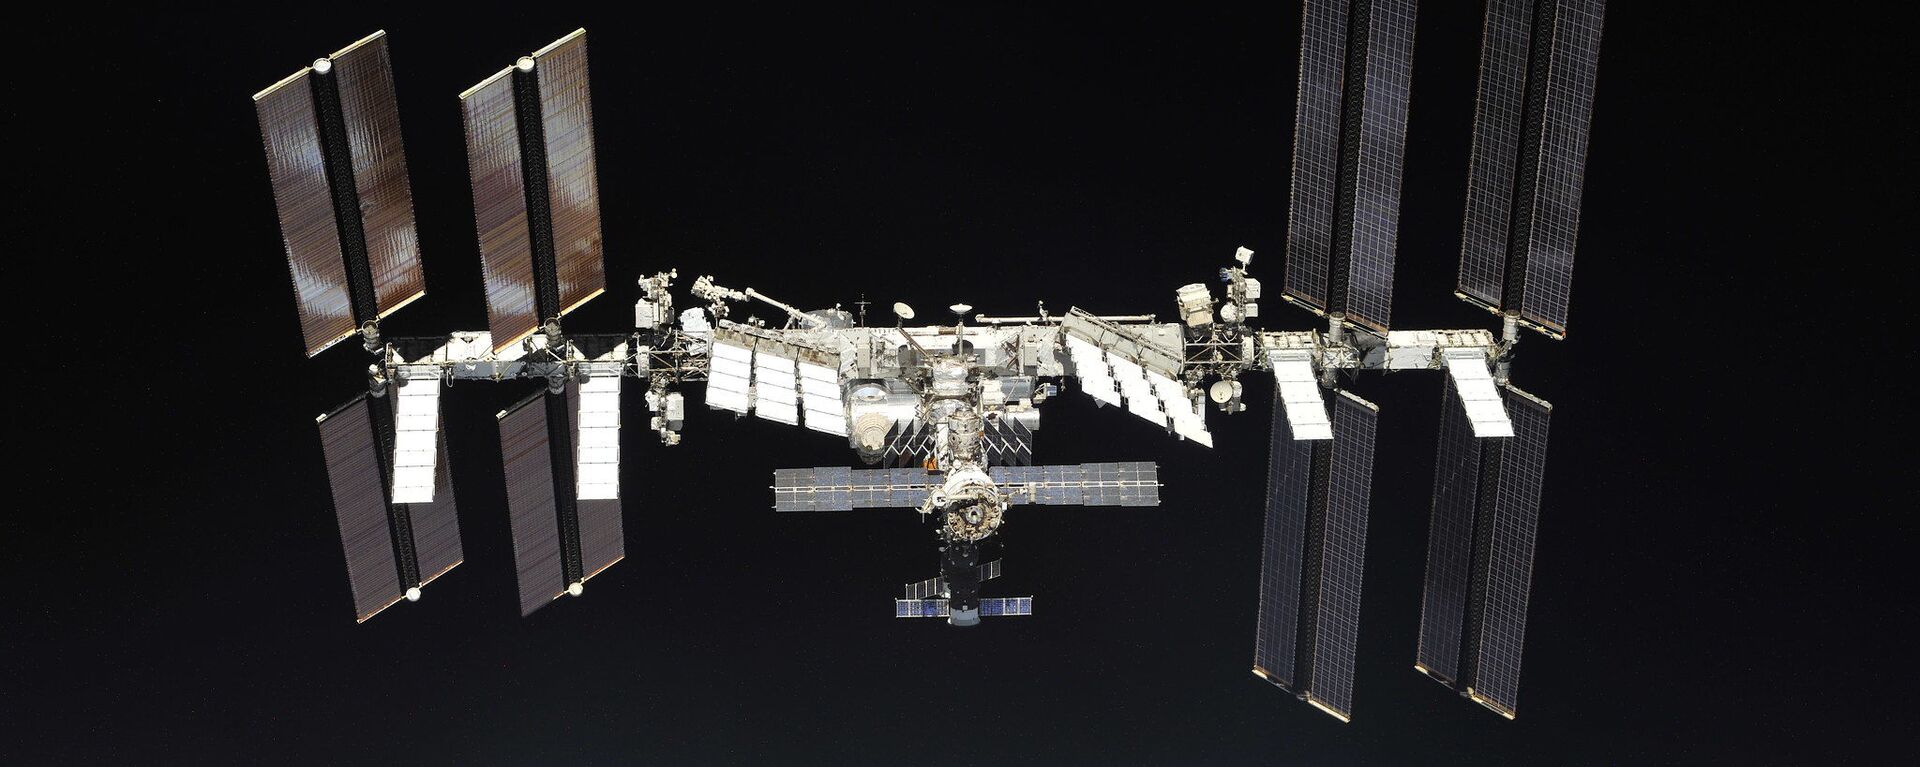 Estación Espacial Internacional (EEI) - Sputnik Mundo, 1920, 22.01.2021